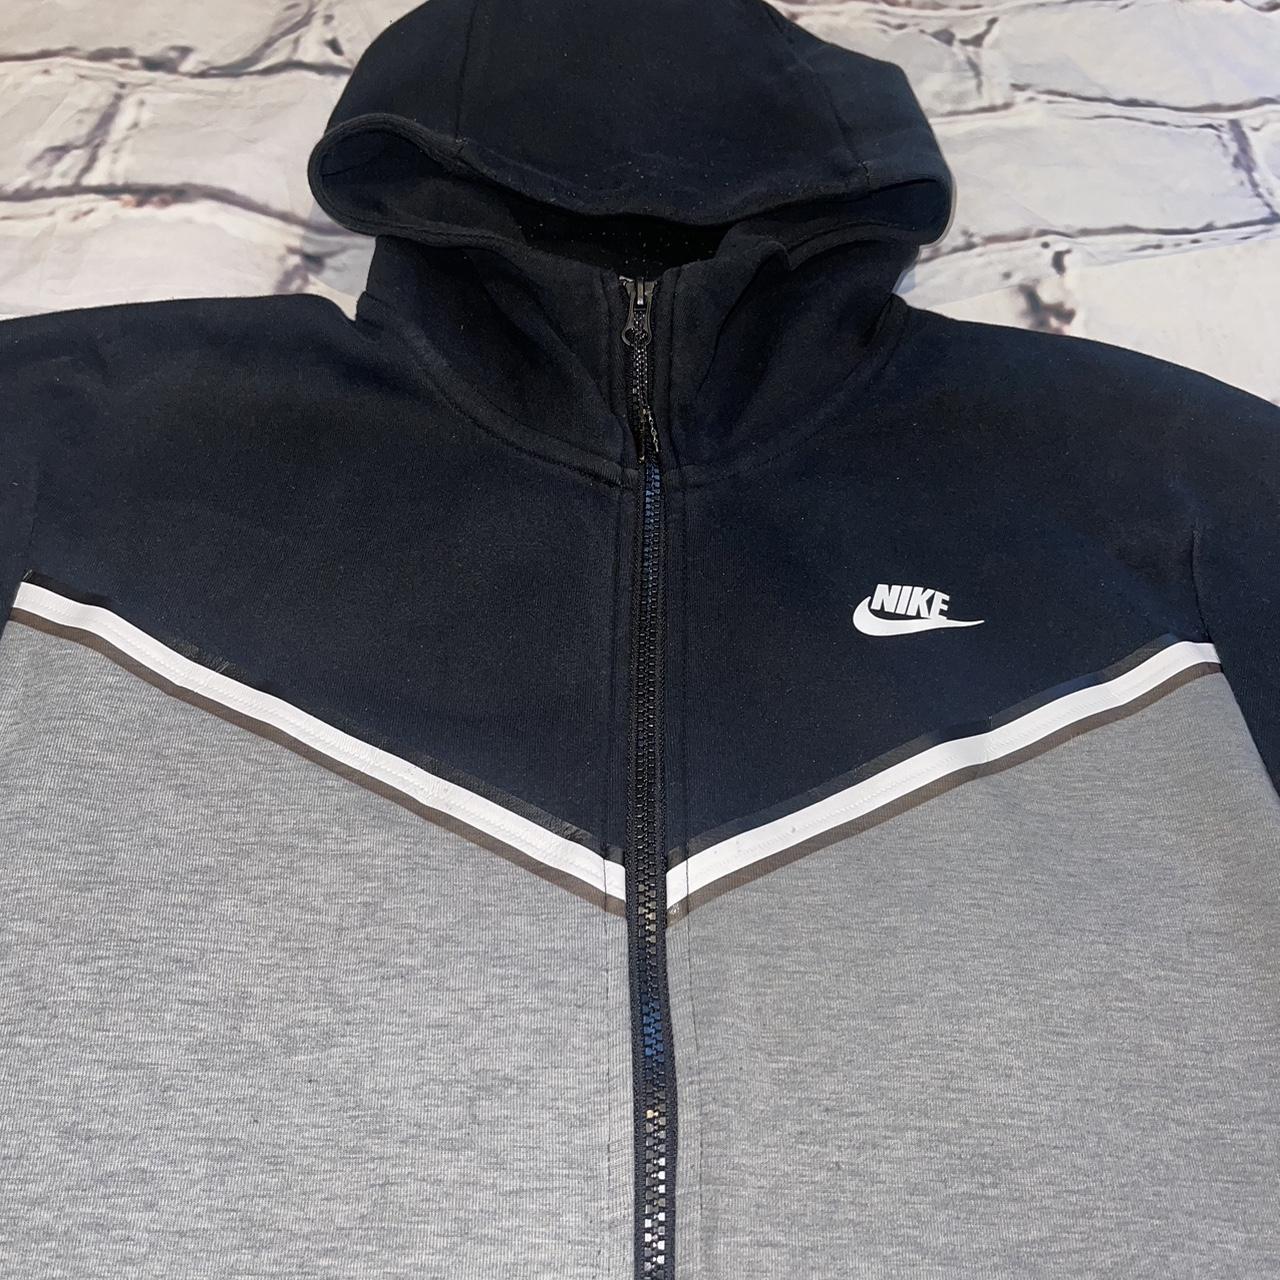 Nike Men's Black and Grey Jacket | Depop